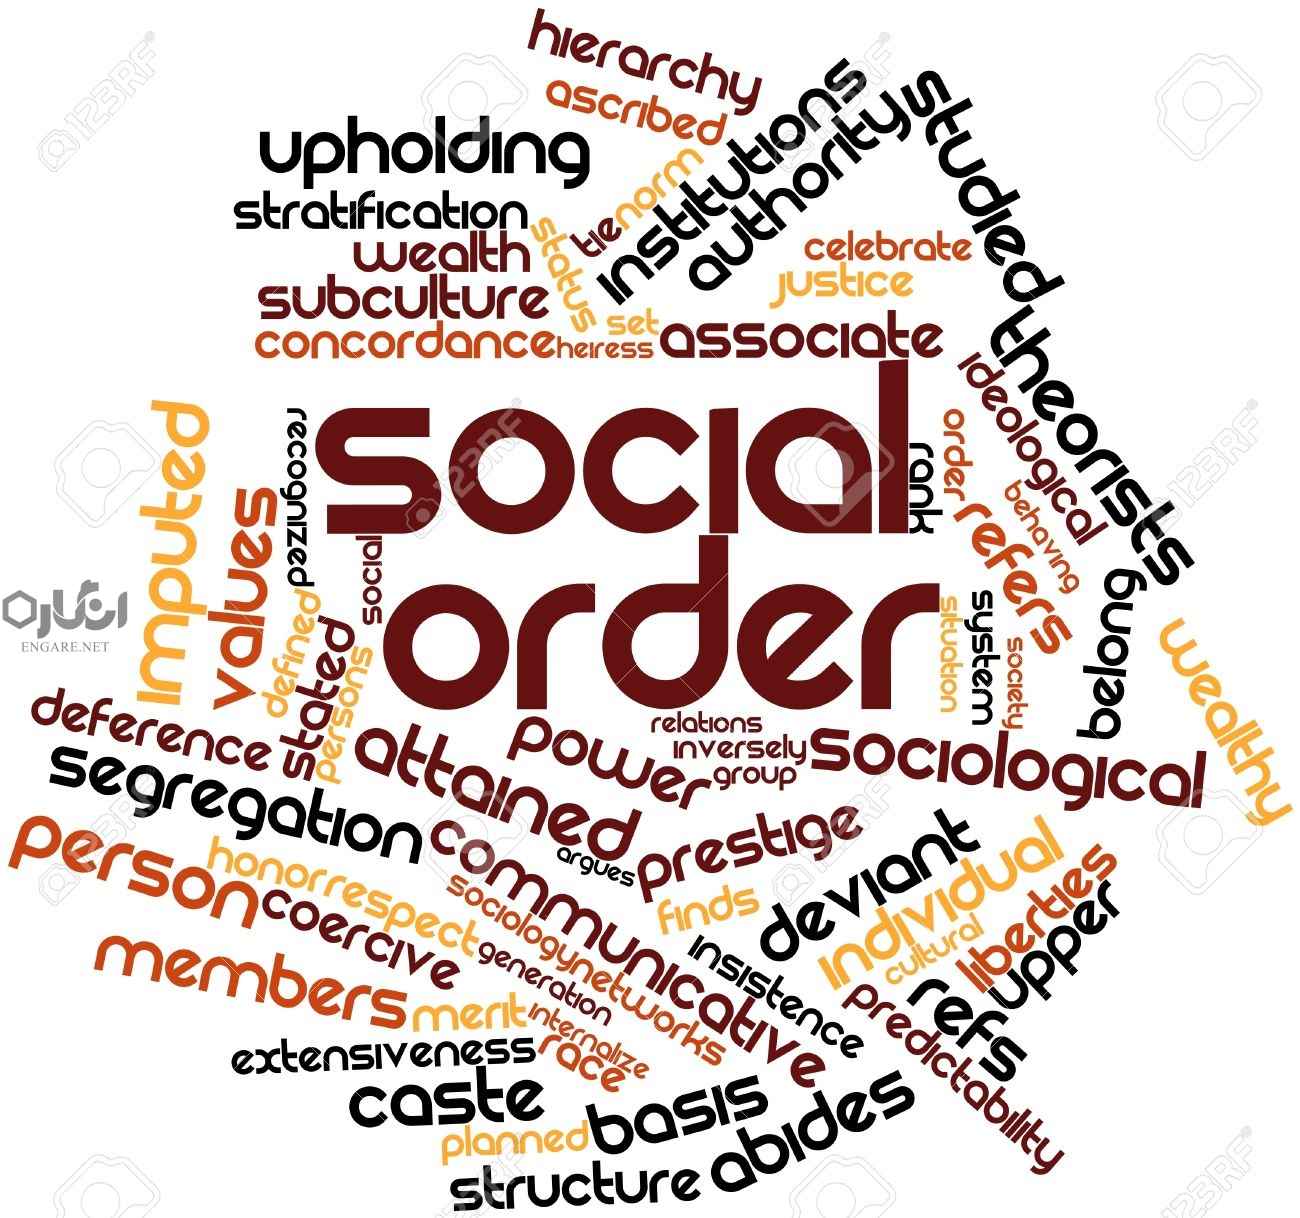 Social order terms - نظم اجتماعی - هنجار, نظم اجتماعی, نظریه, مفاهیم, علوم اجتماعی, جامعه شناسی, جامعه شناختی, Social order